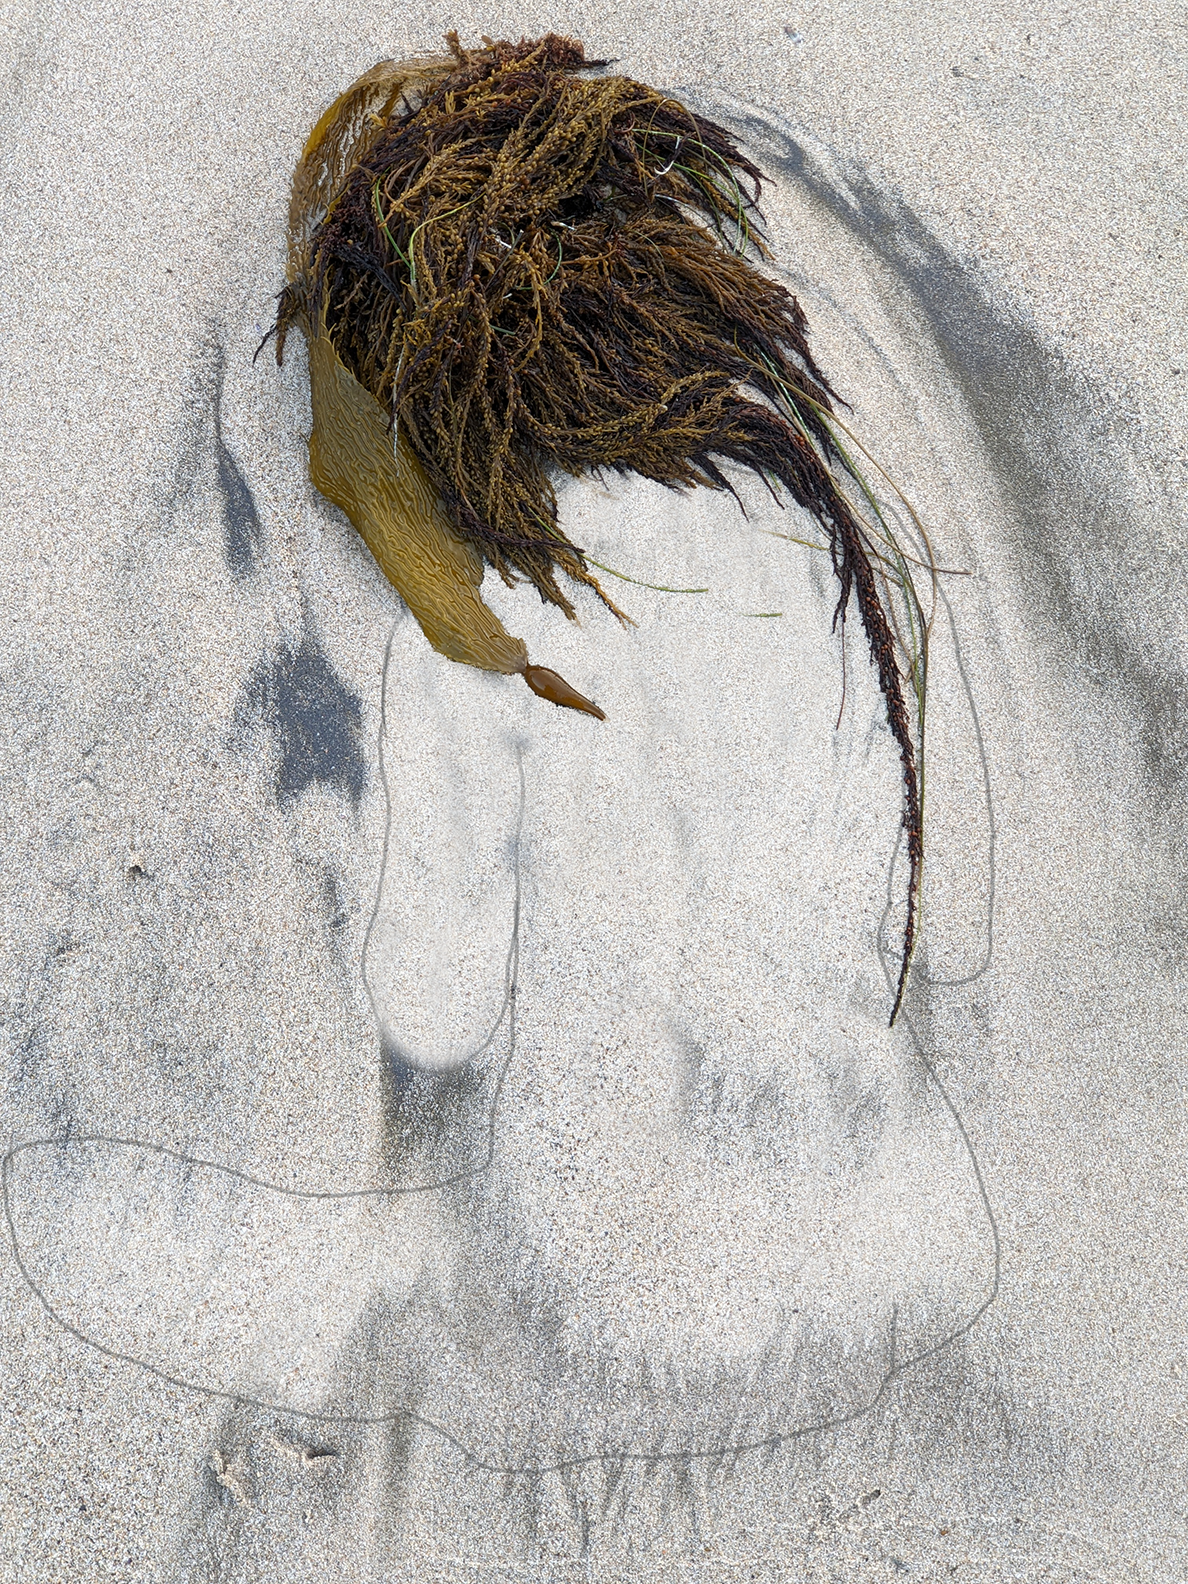 nude figure on beach with sea grass hair